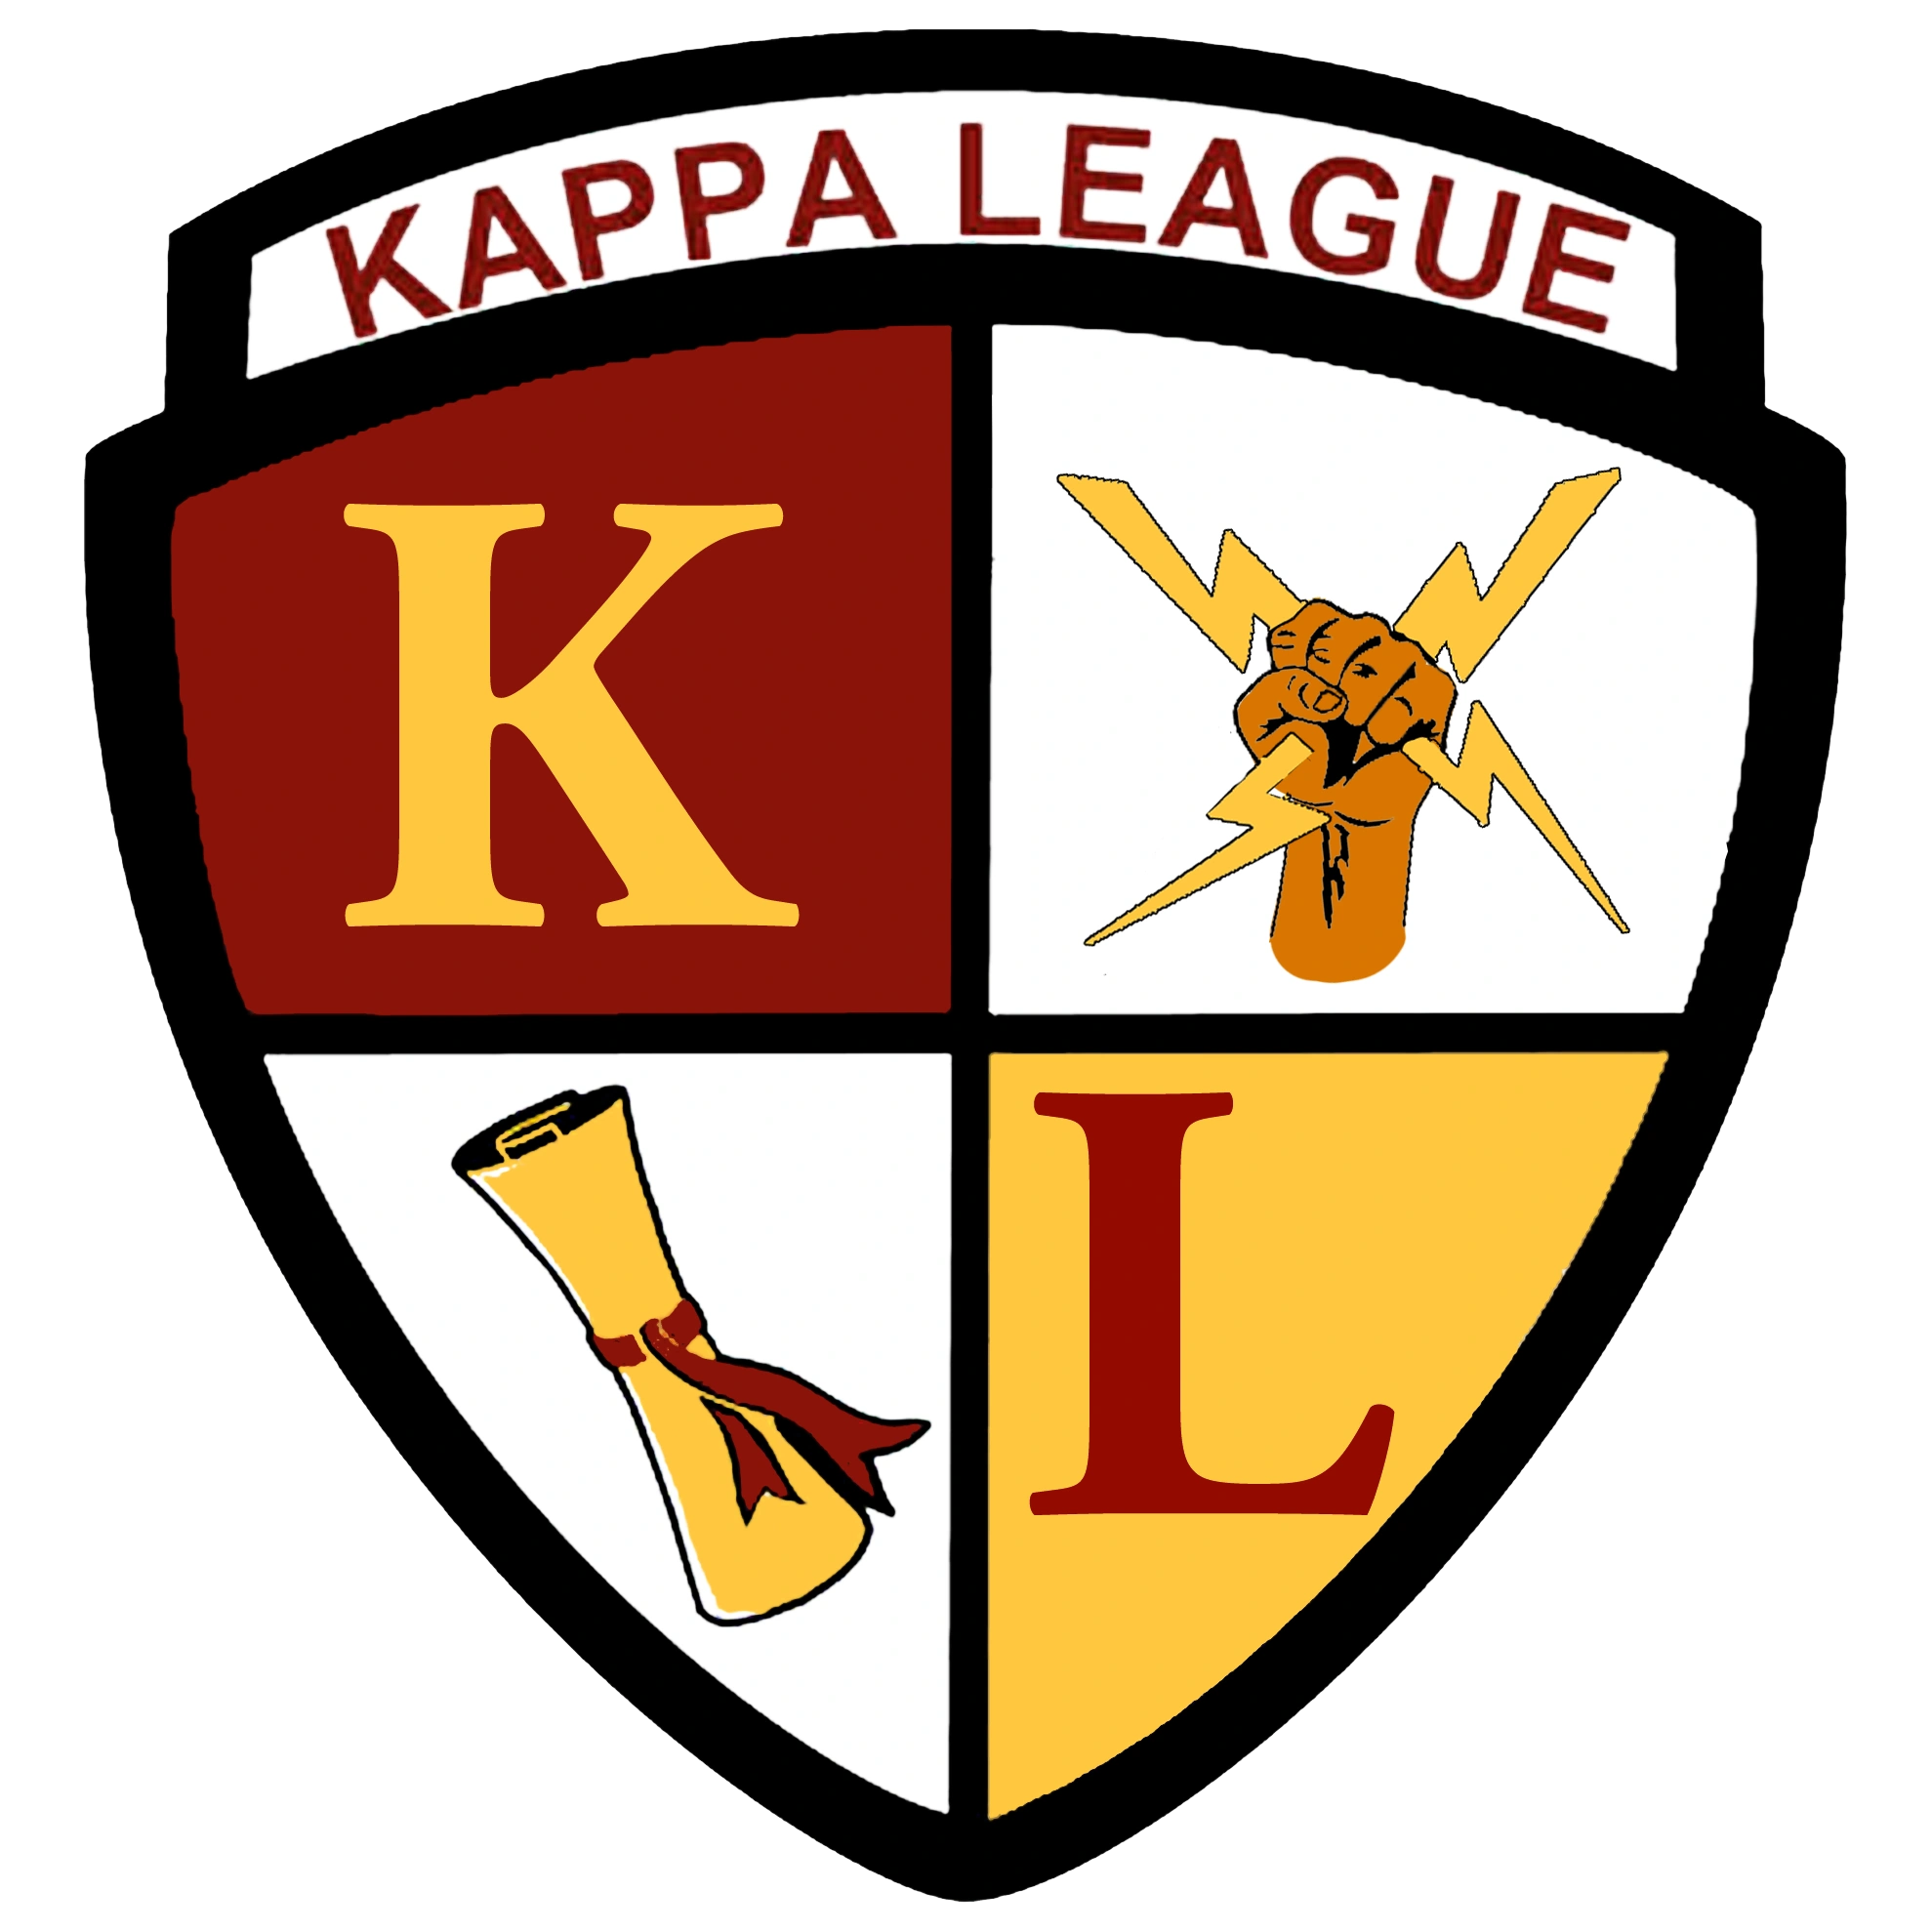 Kappa League